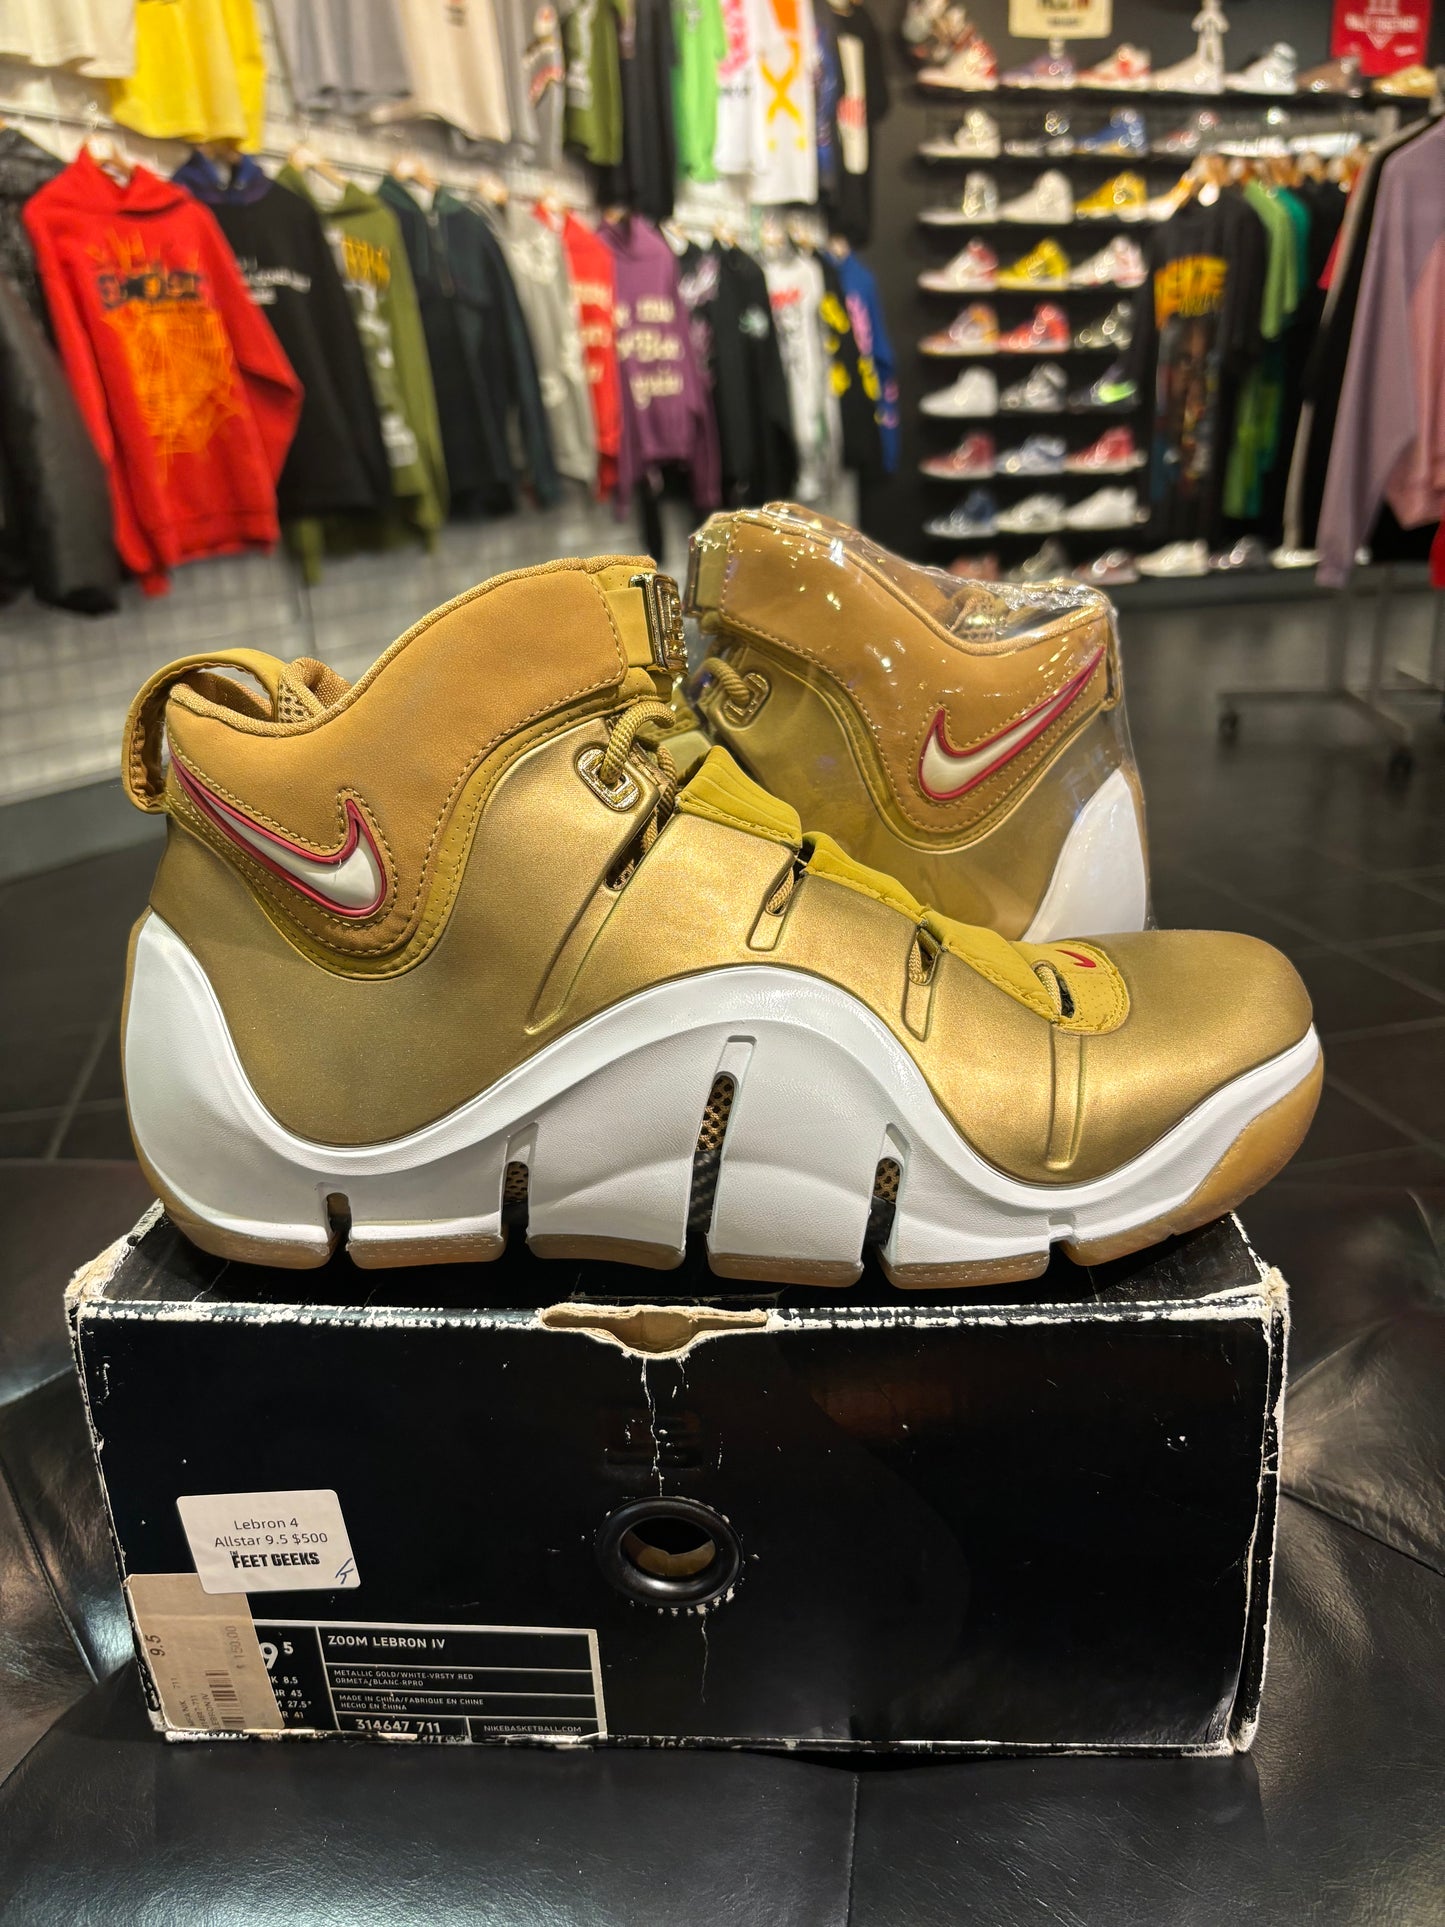 Men’s Nike LeBron 4 Allstar Size 9.5